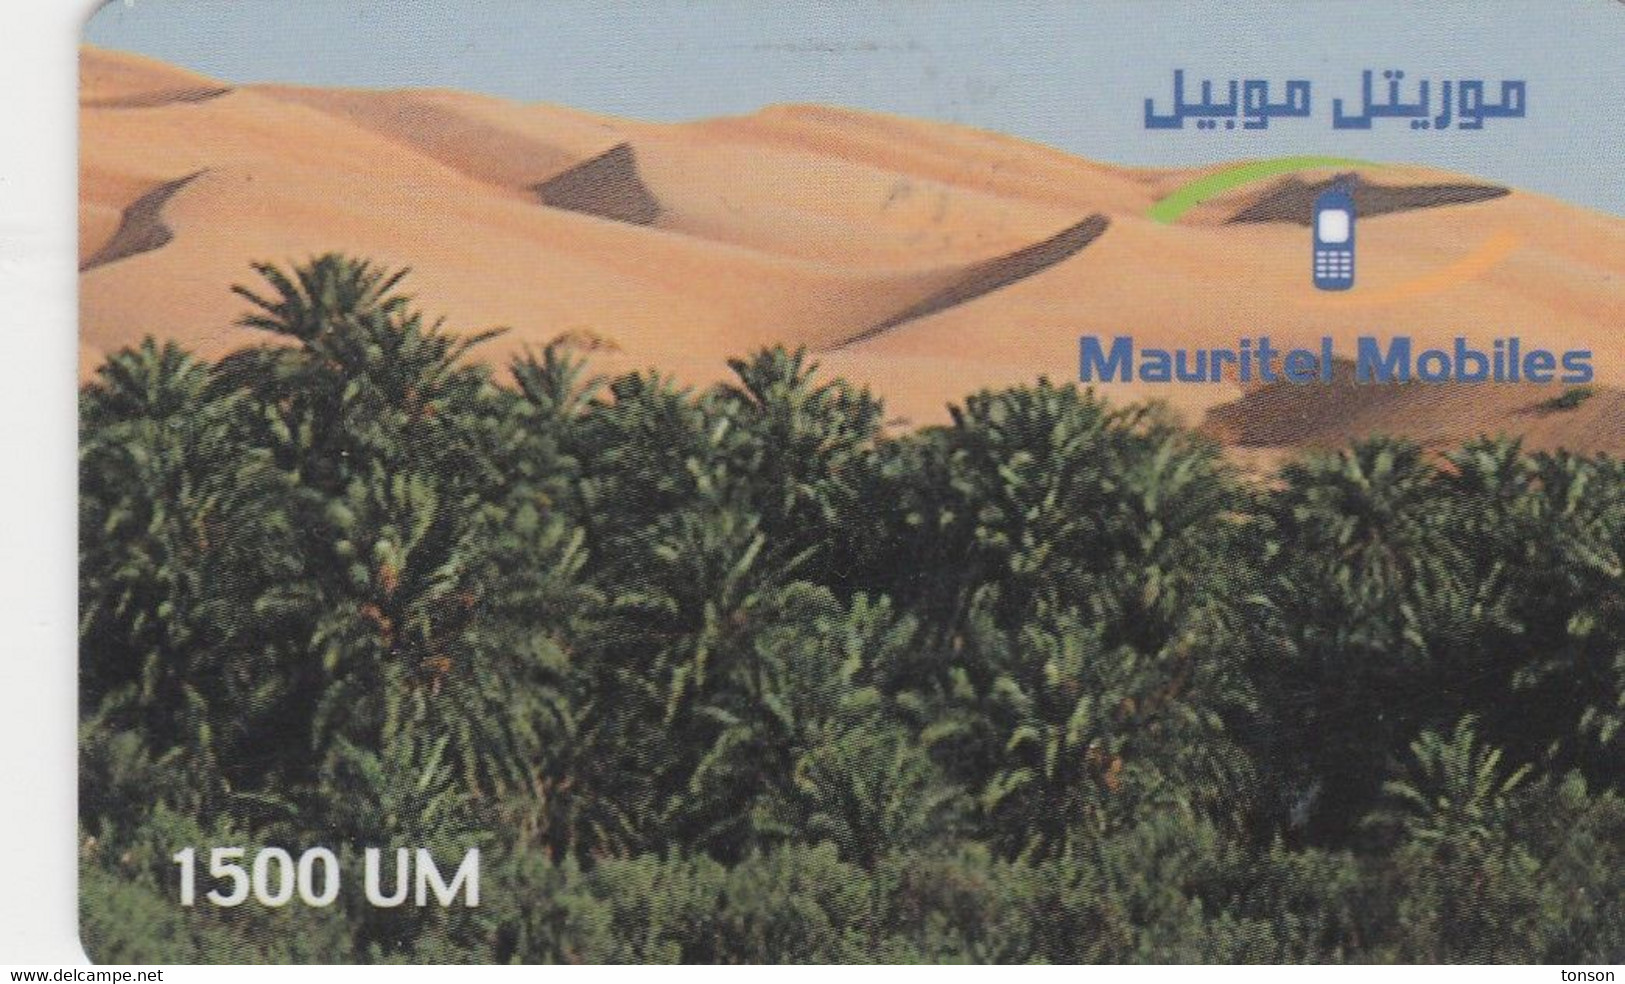 Mauritania, MR-MAU-NAT-0016, 1500 UM,  Désert - 2 (01-12-2001), 2 Scans. - Mauritanie